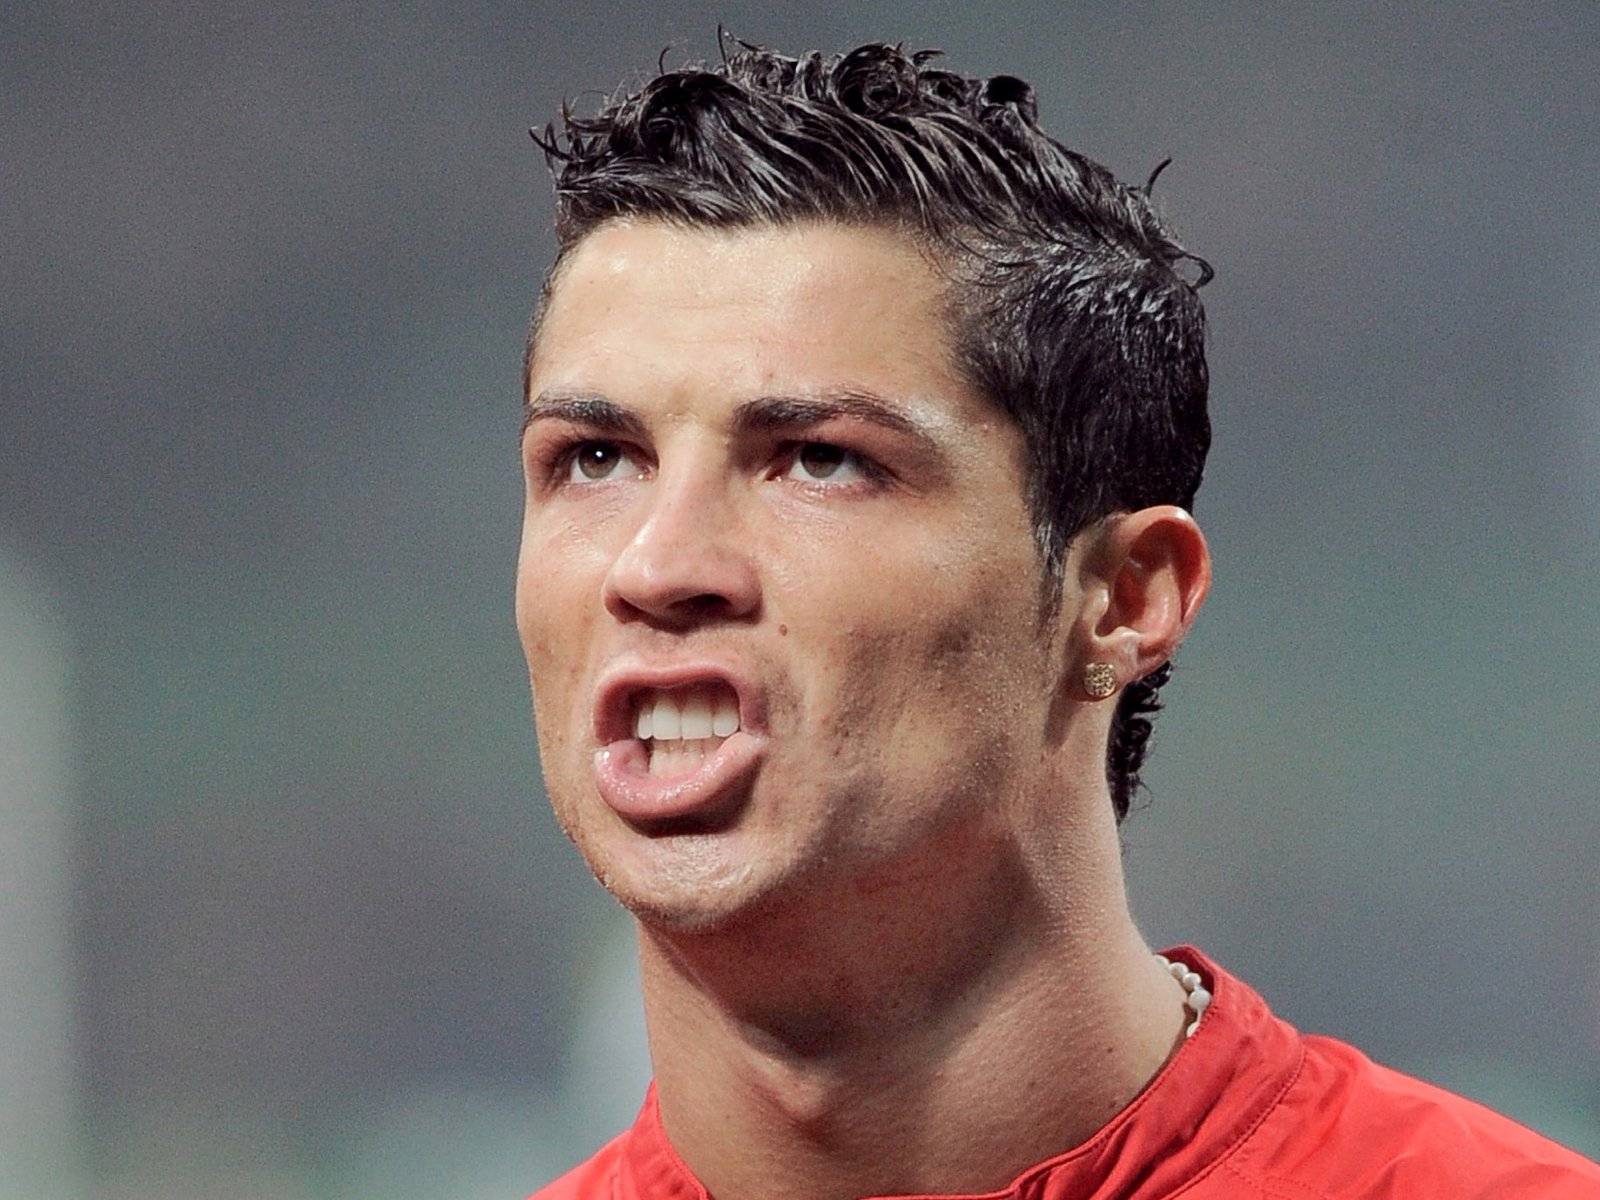 Cristiano Ronaldo-Real Madrid: A guide to soap opera